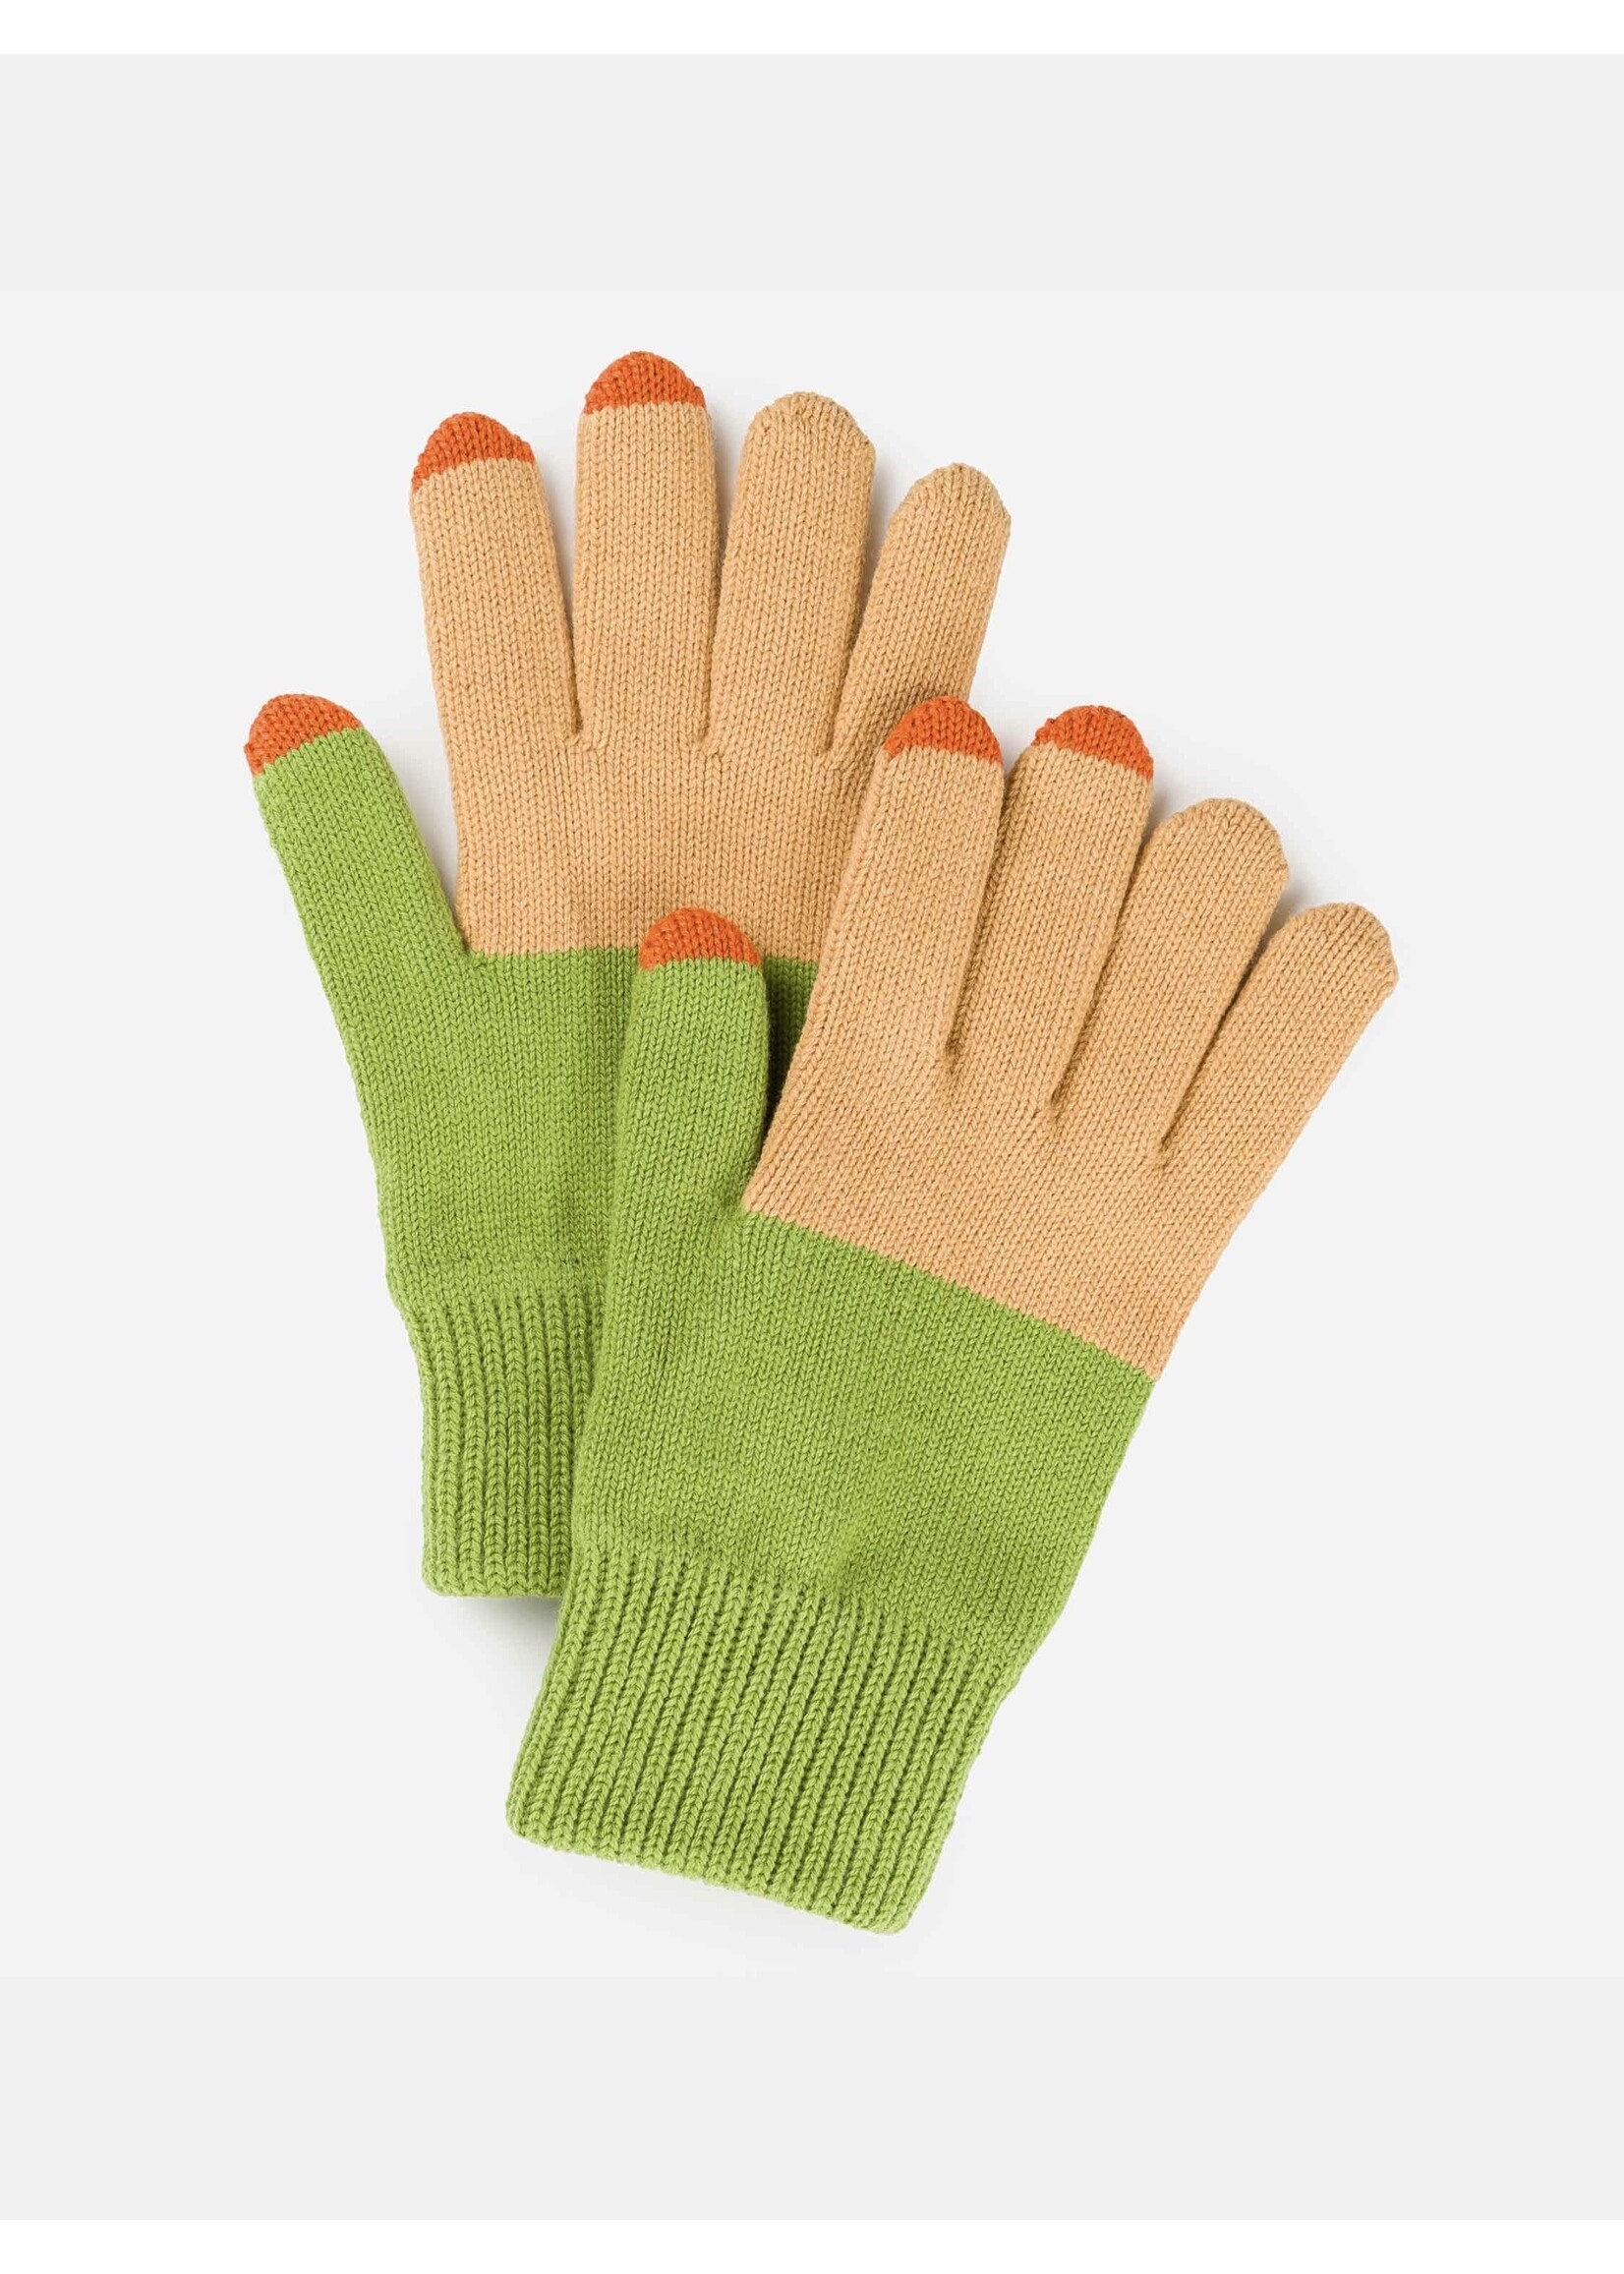 Verloop Touchscreen Gloves "Colorblock Knit" by VERLOOP